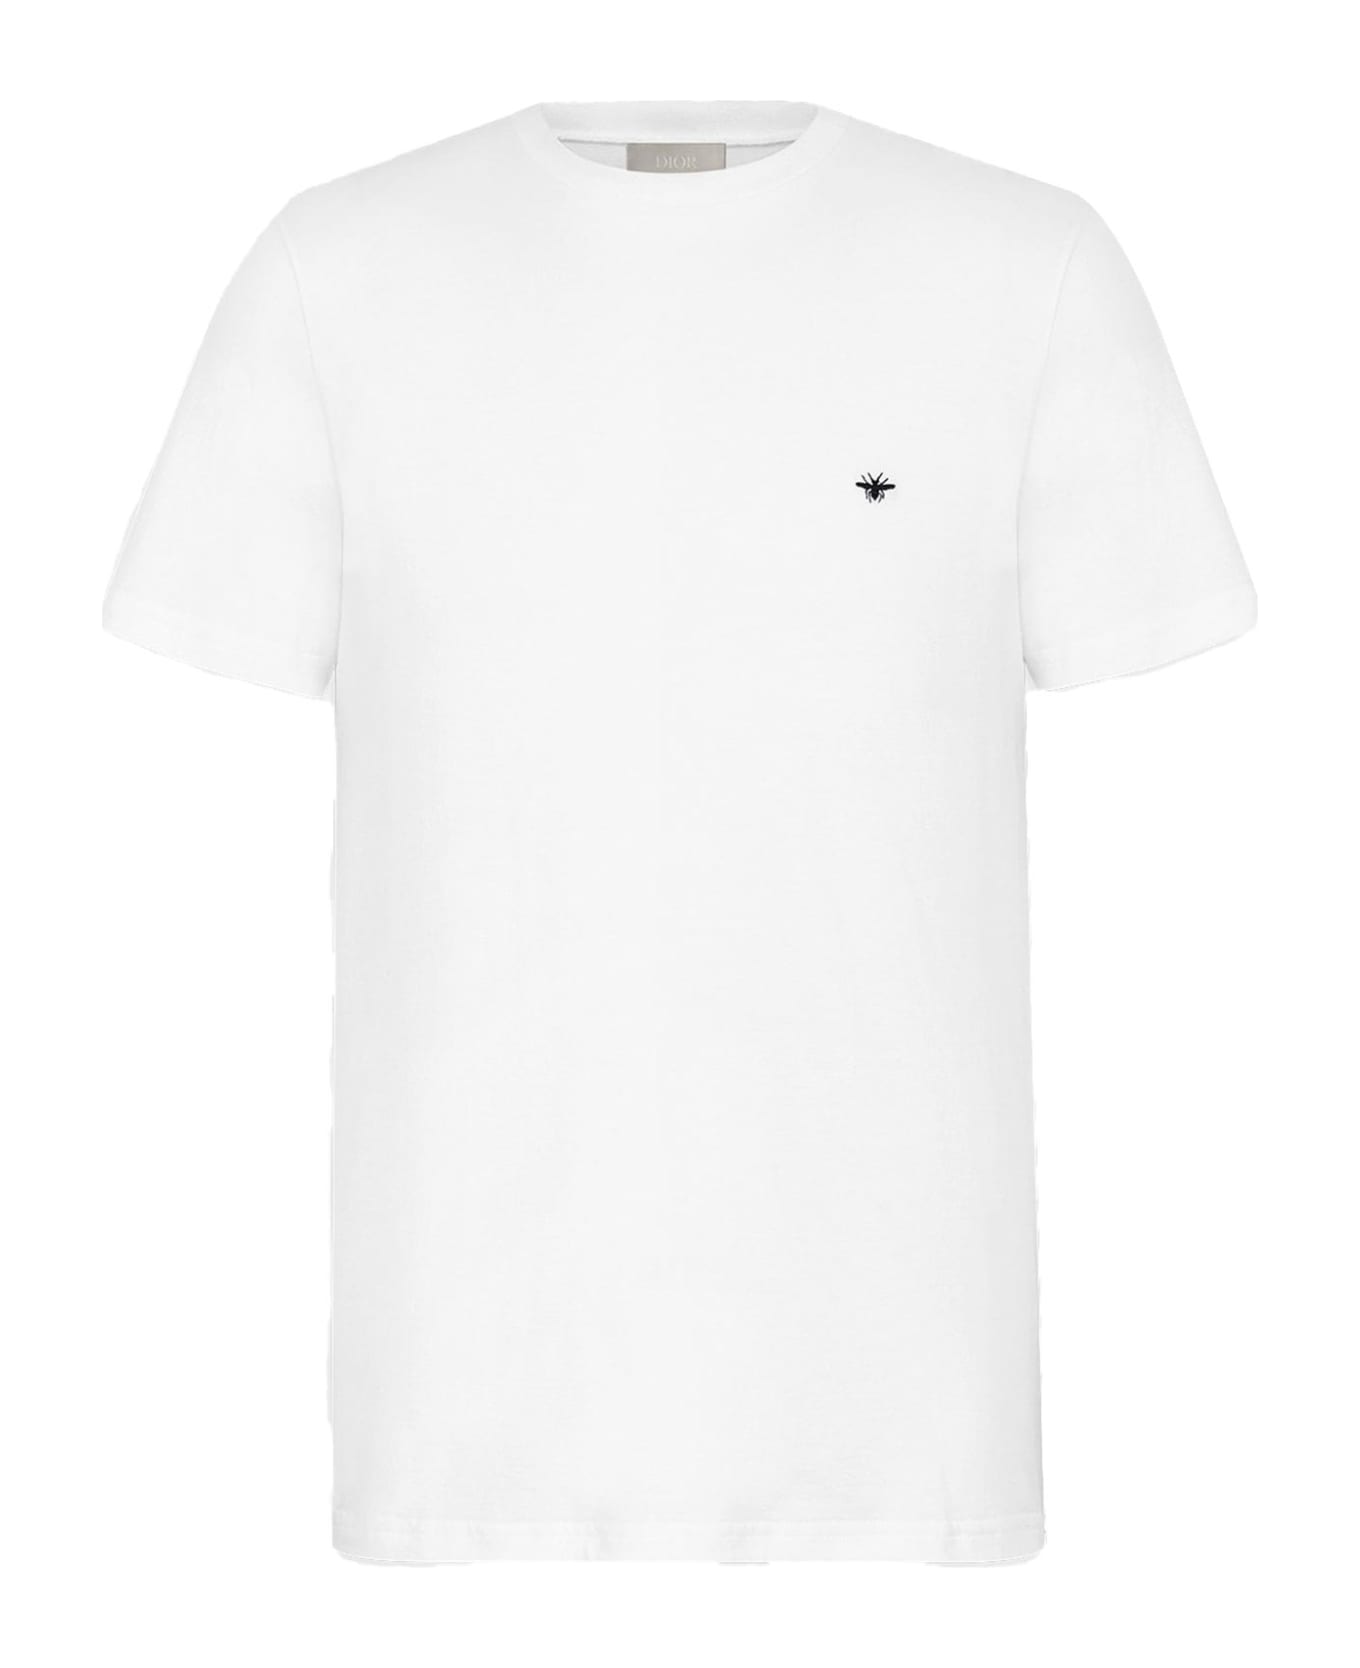 Dior Homme T-Shirt - WHITE シャツ